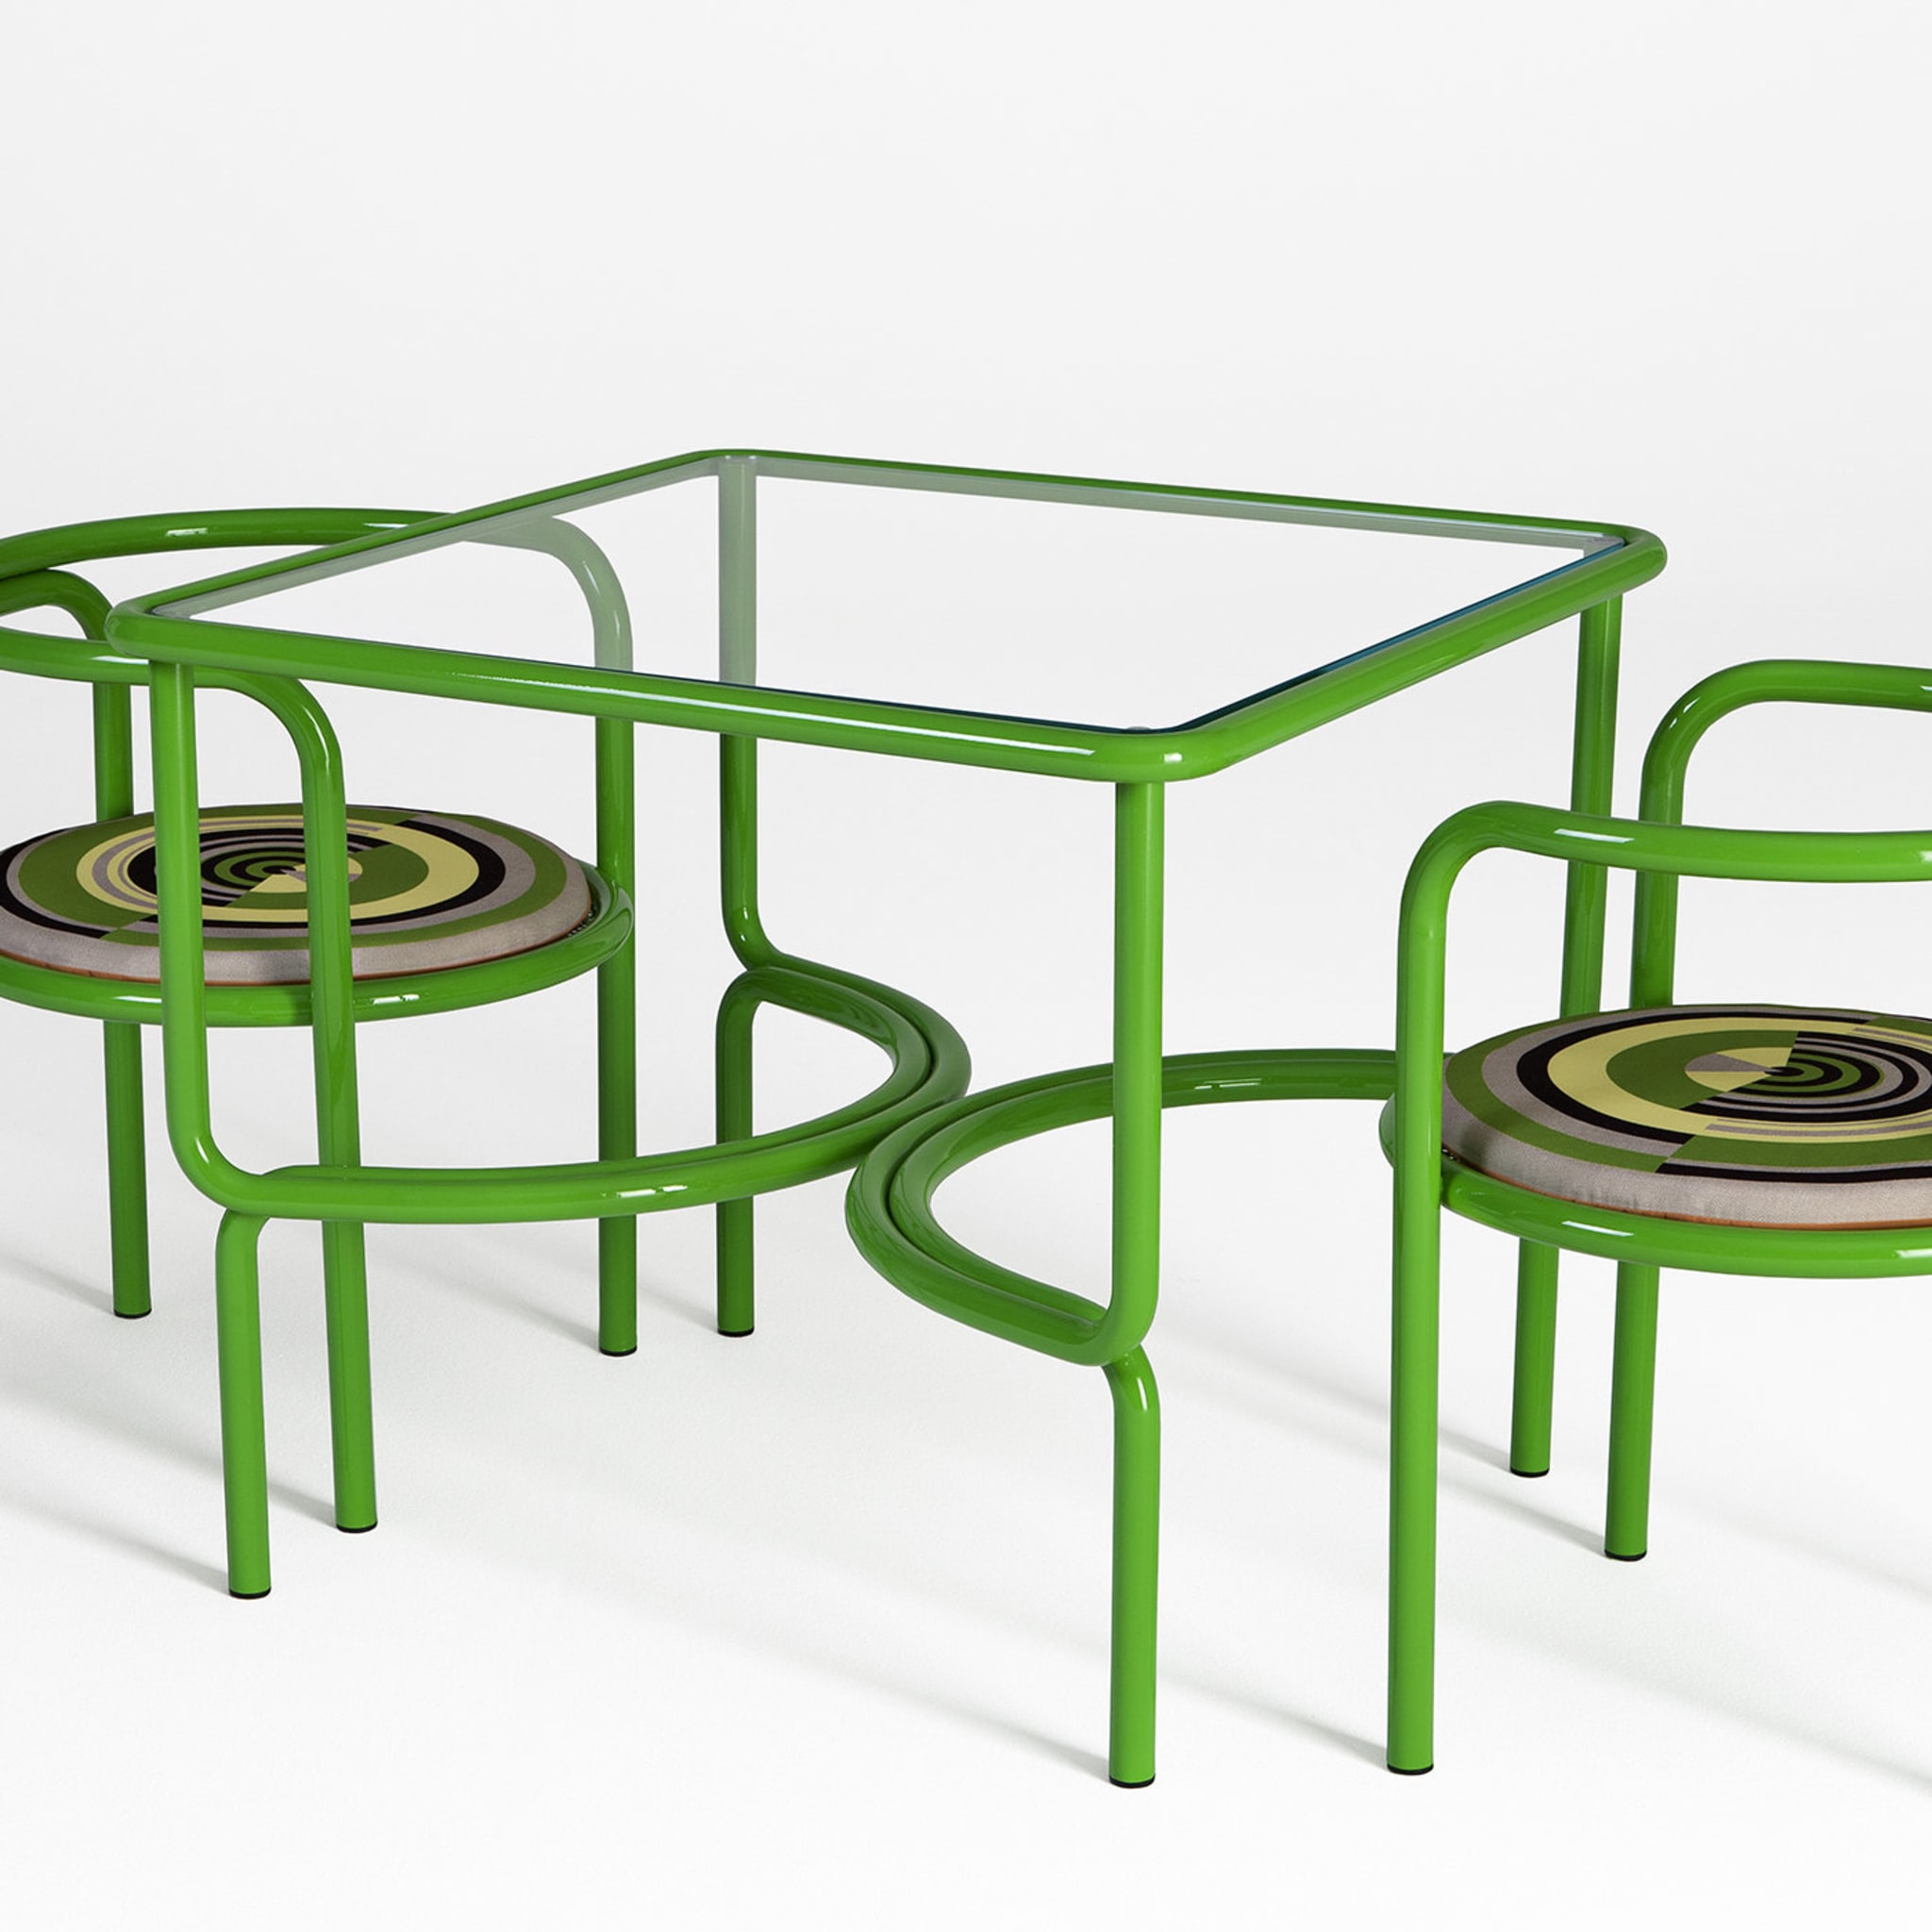 Locus Solus Green Chair by Gae Aulenti - Alternative view 3